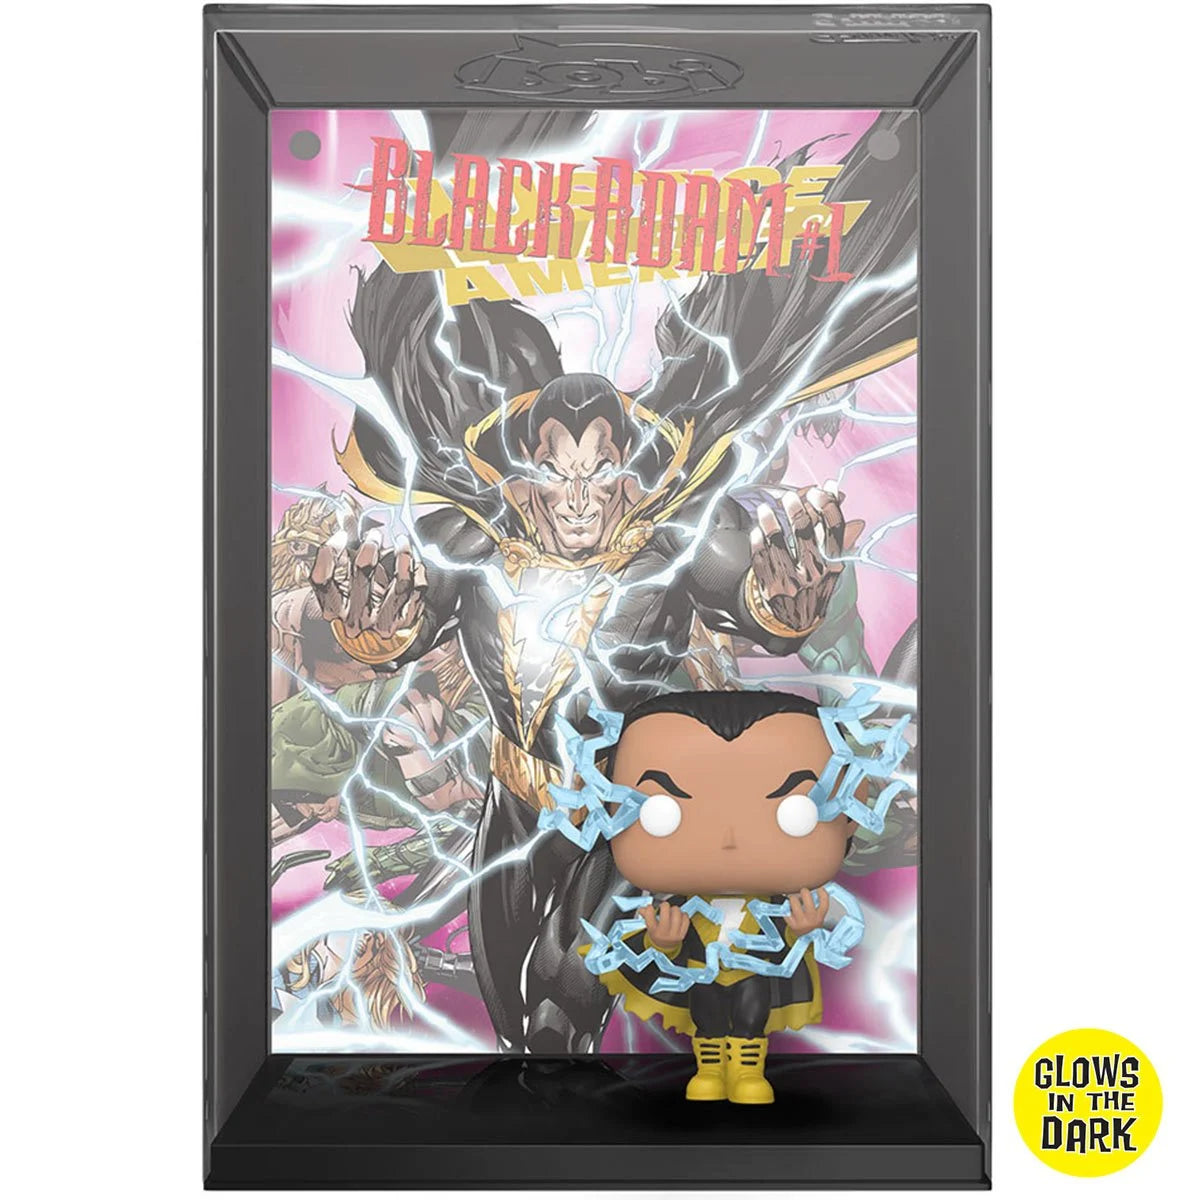 Black Adam Glow-in-the-Dark Pop! Comic Cover Figure with Case Hasbro